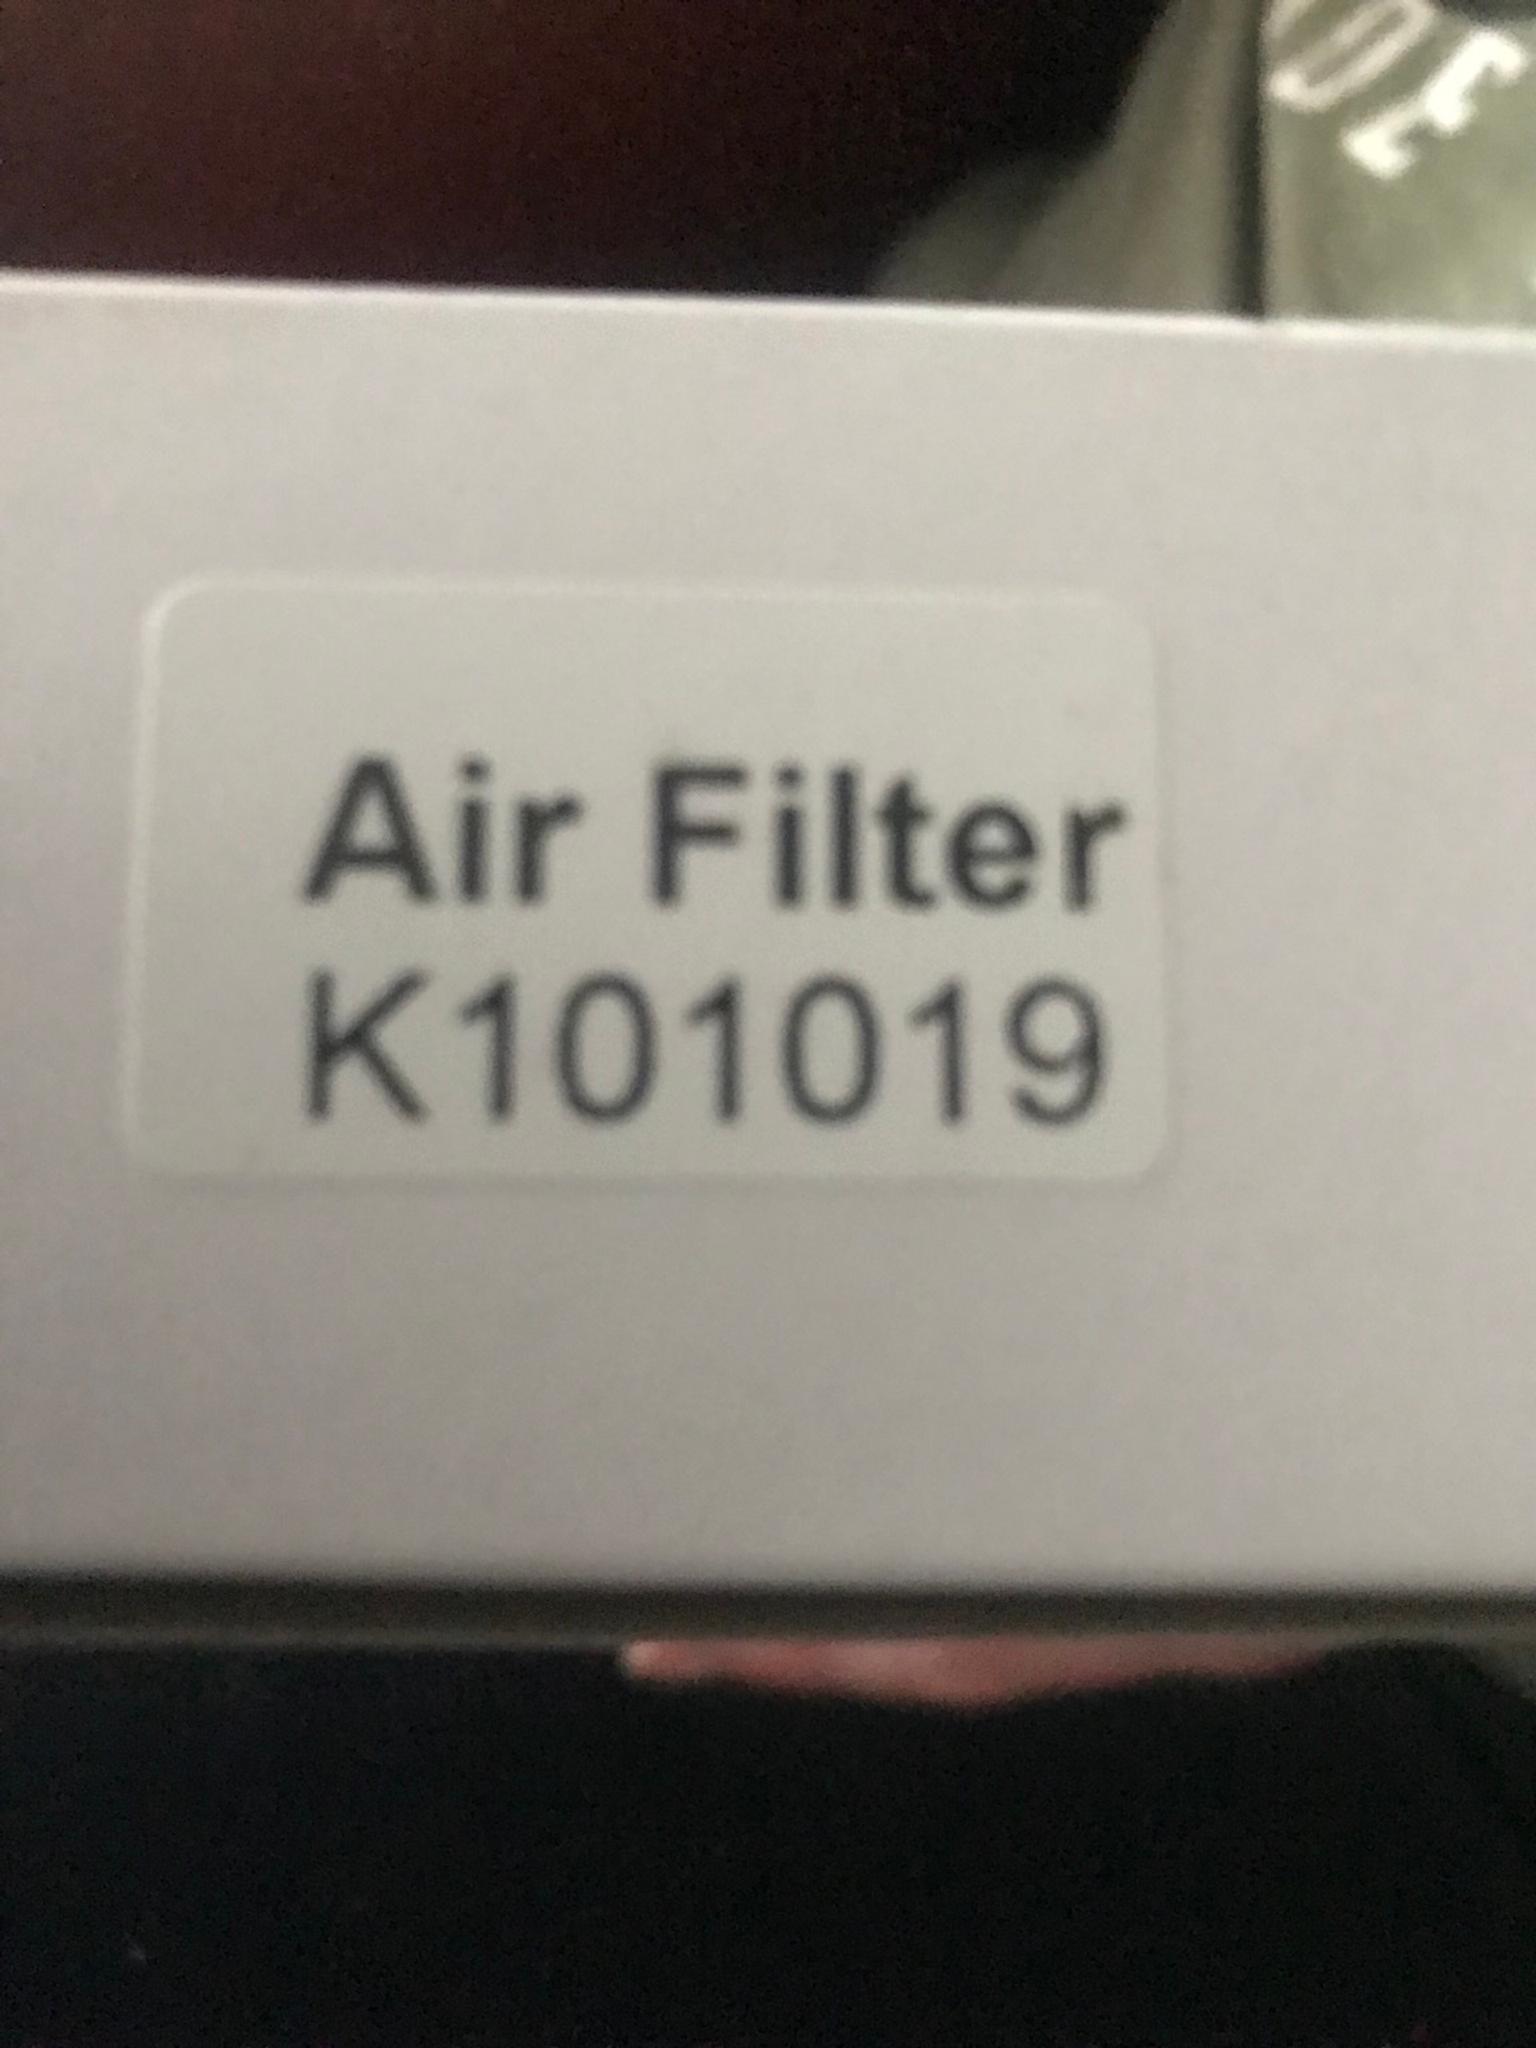 Kia Picanto Air Filter Solid Auto K101019 1.0 1.1